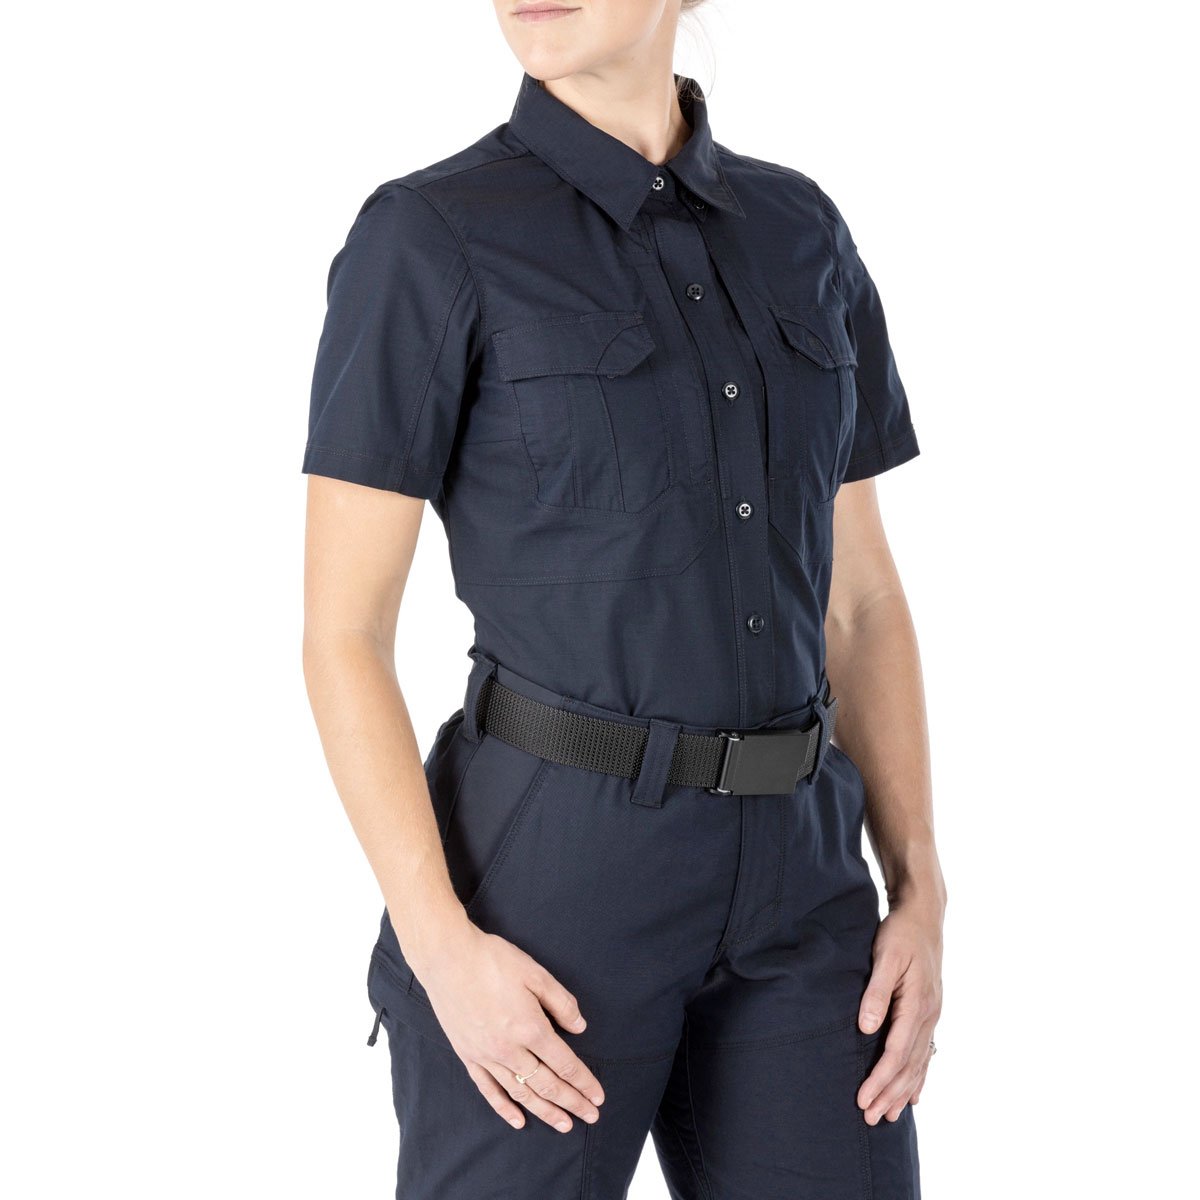 5.11 Tactical Womens Stryke Short Sleeve Shirt Dark Navy Shirts 5.11 Tactical Tactical Gear Supplier Tactical Distributors Australia